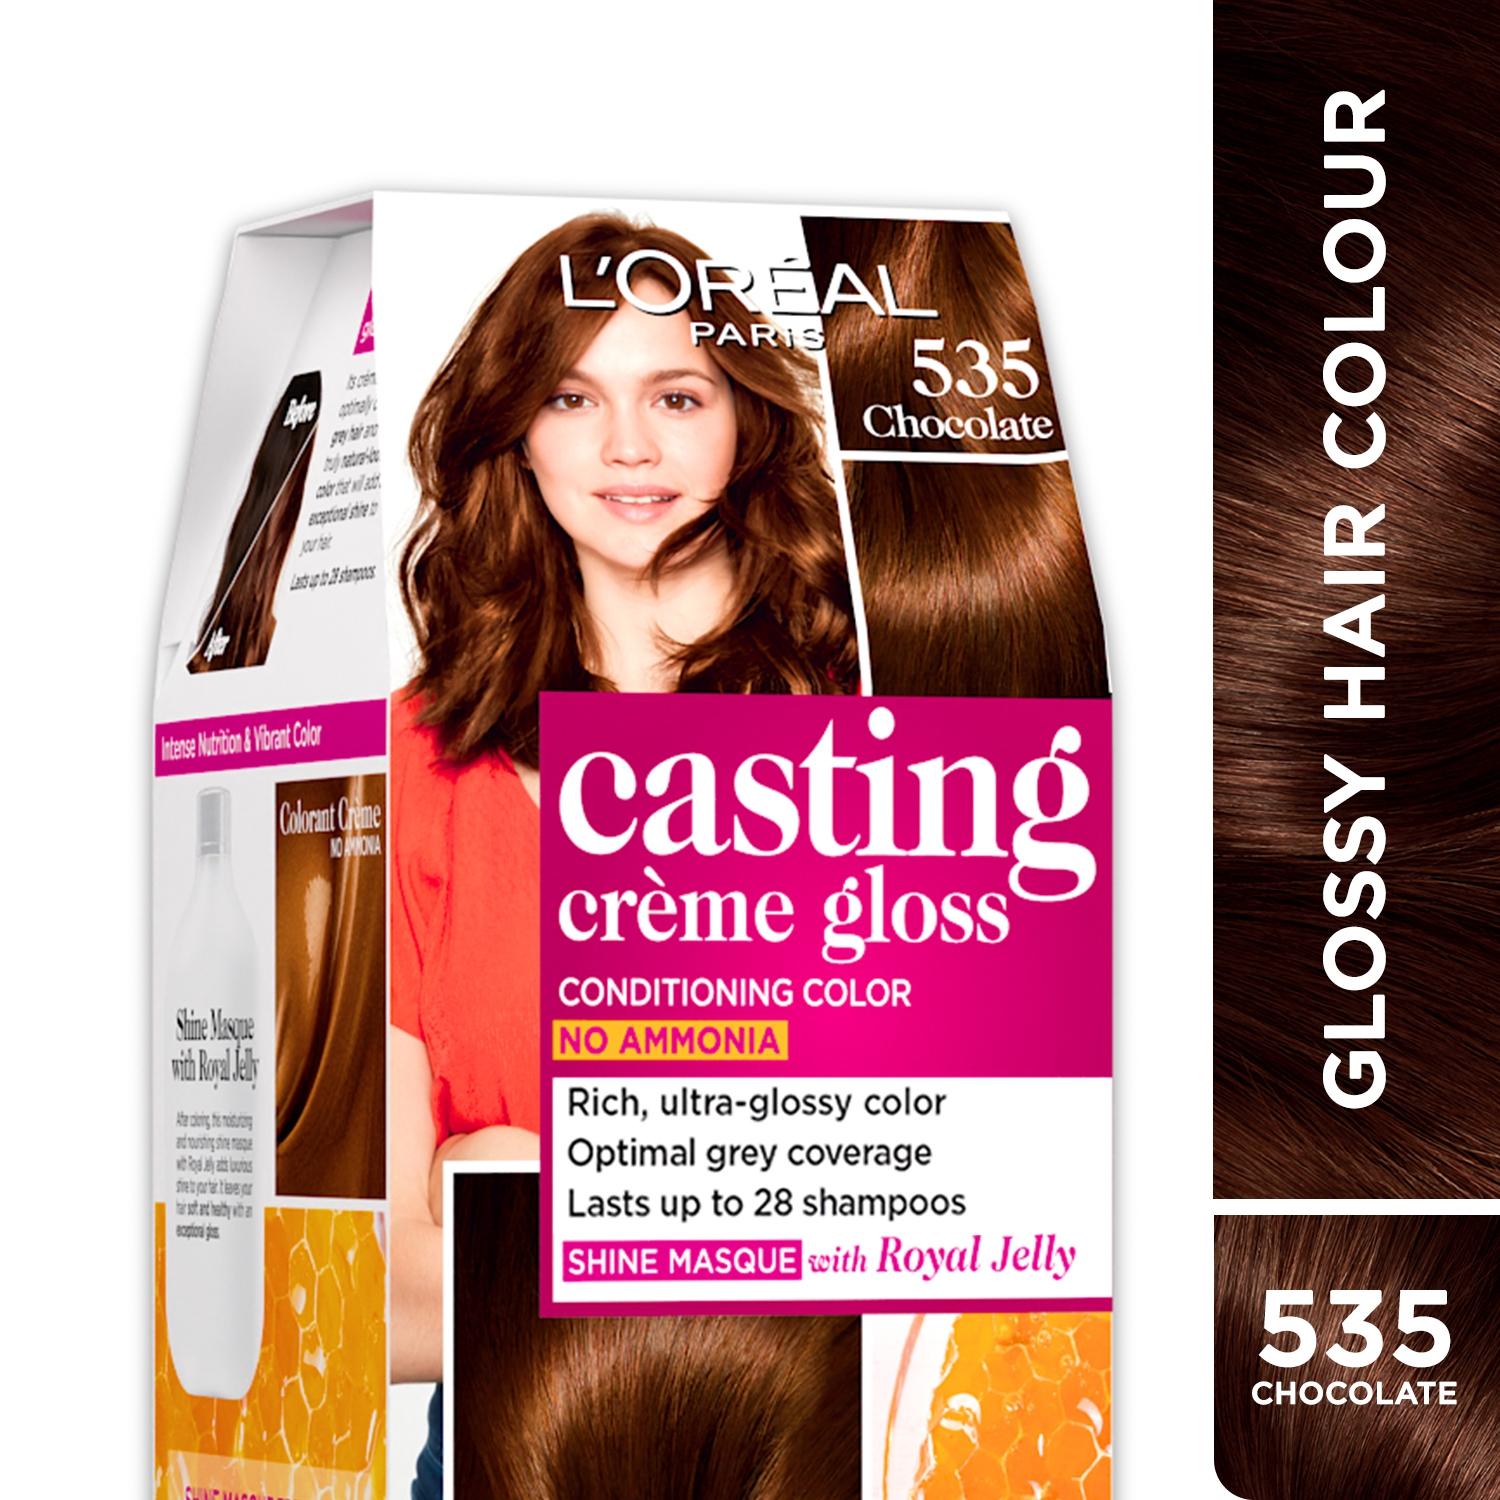 l'oreal-paris-casting-creme-gloss-hair-color,-535-chocolate,-87.5g+72ml